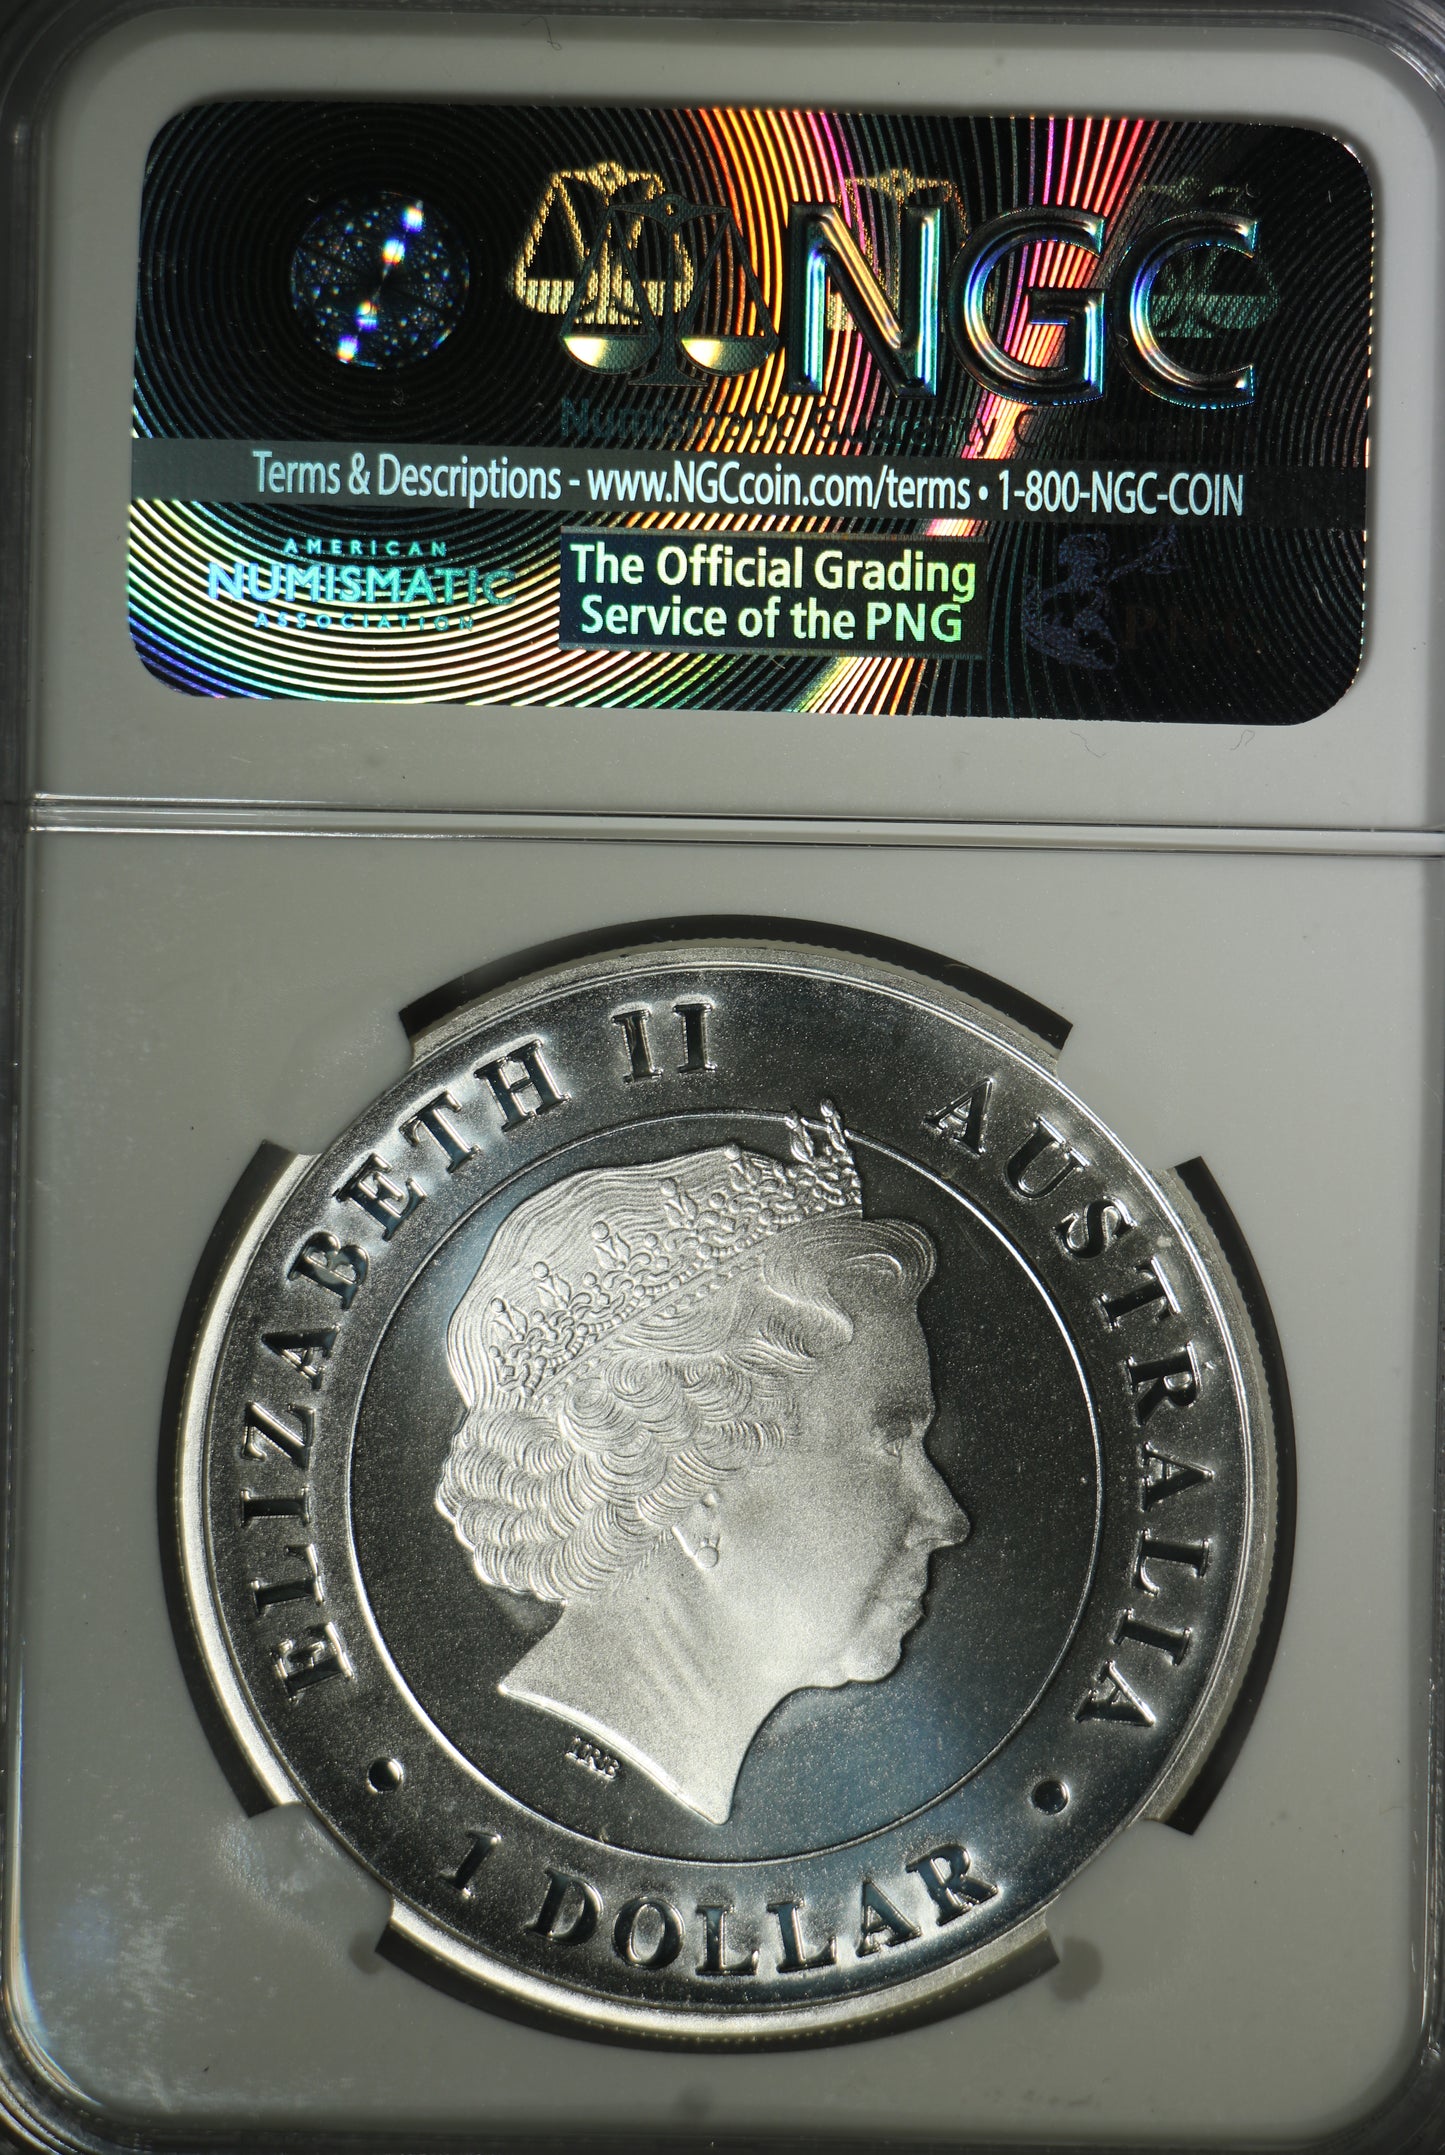 2015P NGC Australian Silver Kangaroo From Mint Sealed Box #1 eBay Label 1oz